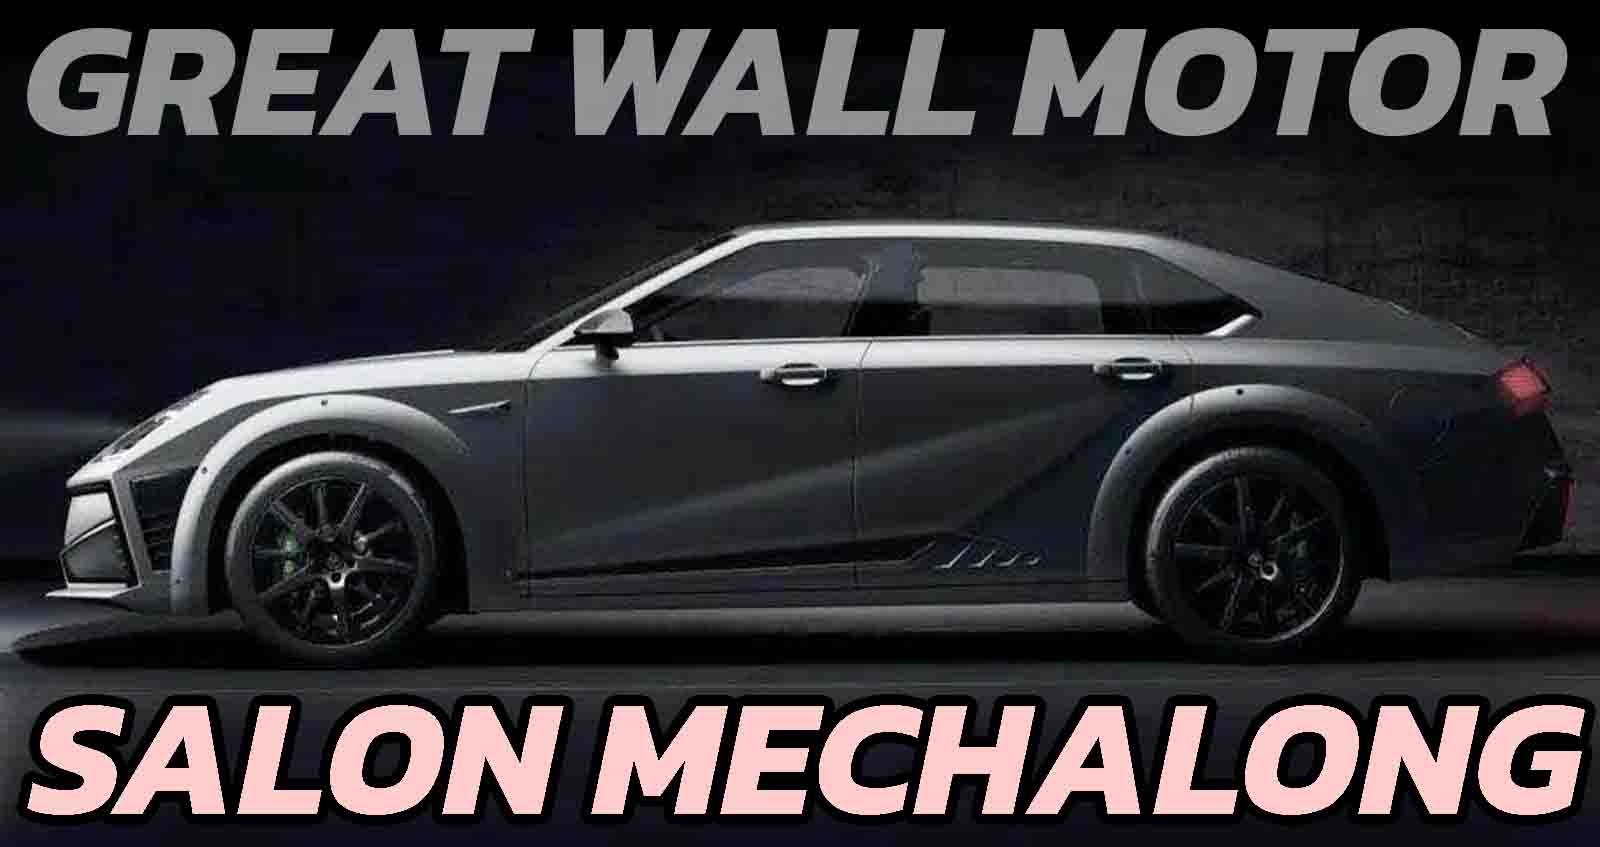 Great Wall Motor เผยภาพ Salon Mechalong ซีดานหรู สมรรถนะสูง